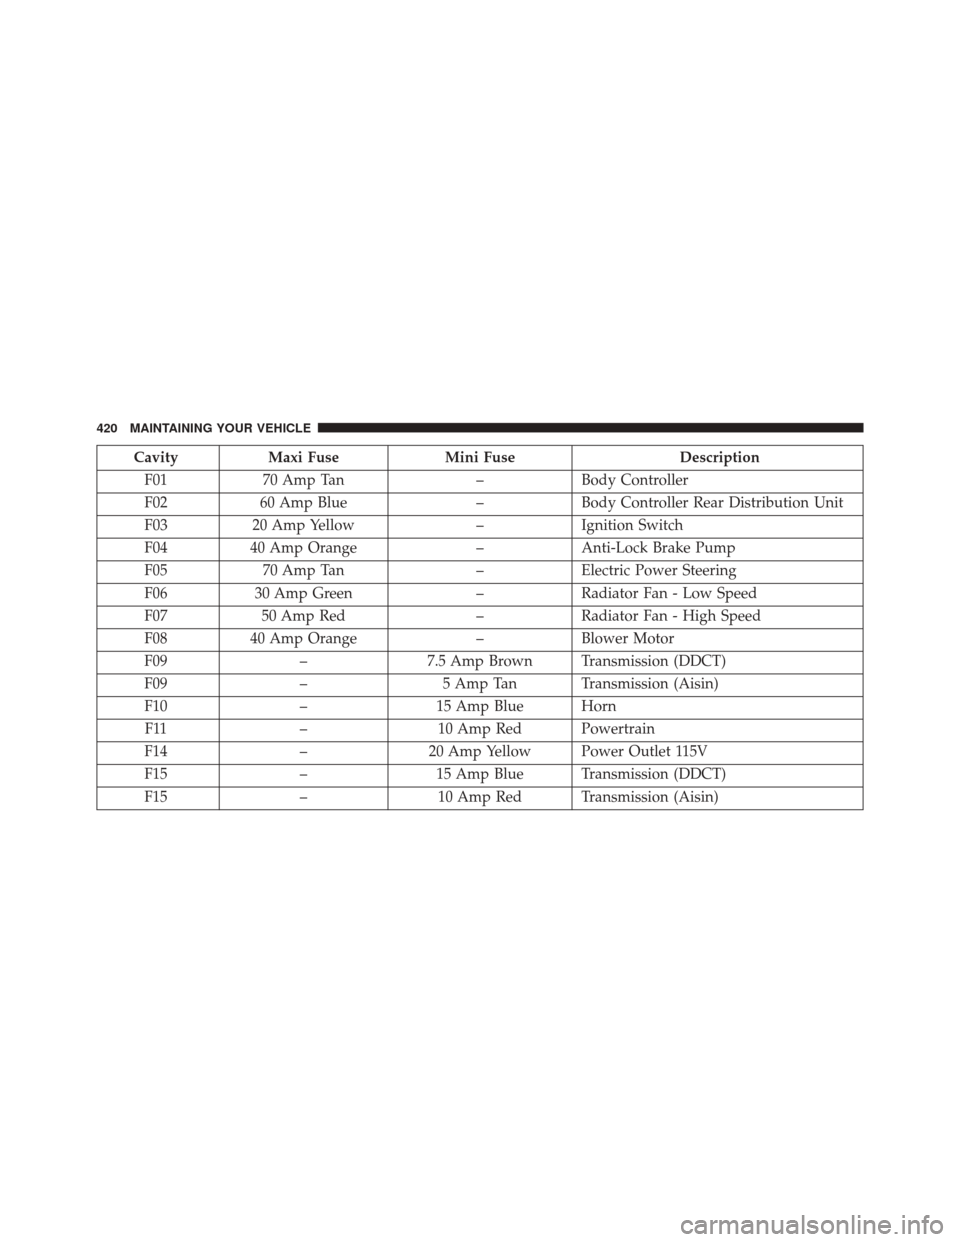 FIAT 500L 2016 2.G Owners Manual CavityMaxi Fuse Mini Fuse Description
F01 70 Amp Tan –Body Controller
F02 60 Amp Blue –Body Controller Rear Distribution Unit
F03 20 Amp Yellow –Ignition Switch
F04 40 Amp Orange –Anti-Lock Br